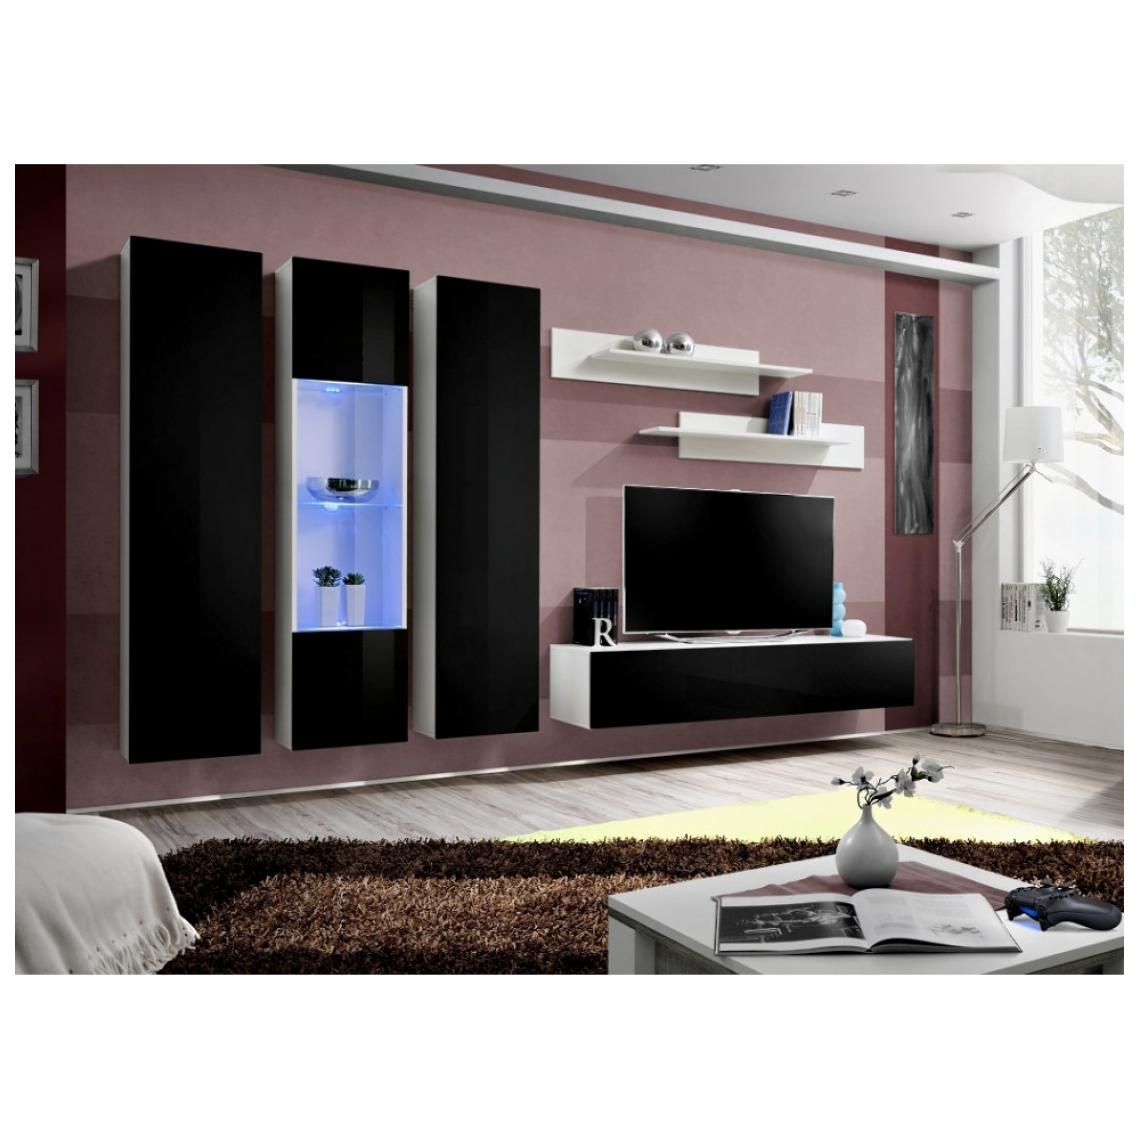 Ac-Deco - Ensemble meuble TV mural - Fly III - 310 cm x 190 cm x 40 cm - Blanc et noir - Meubles TV, Hi-Fi